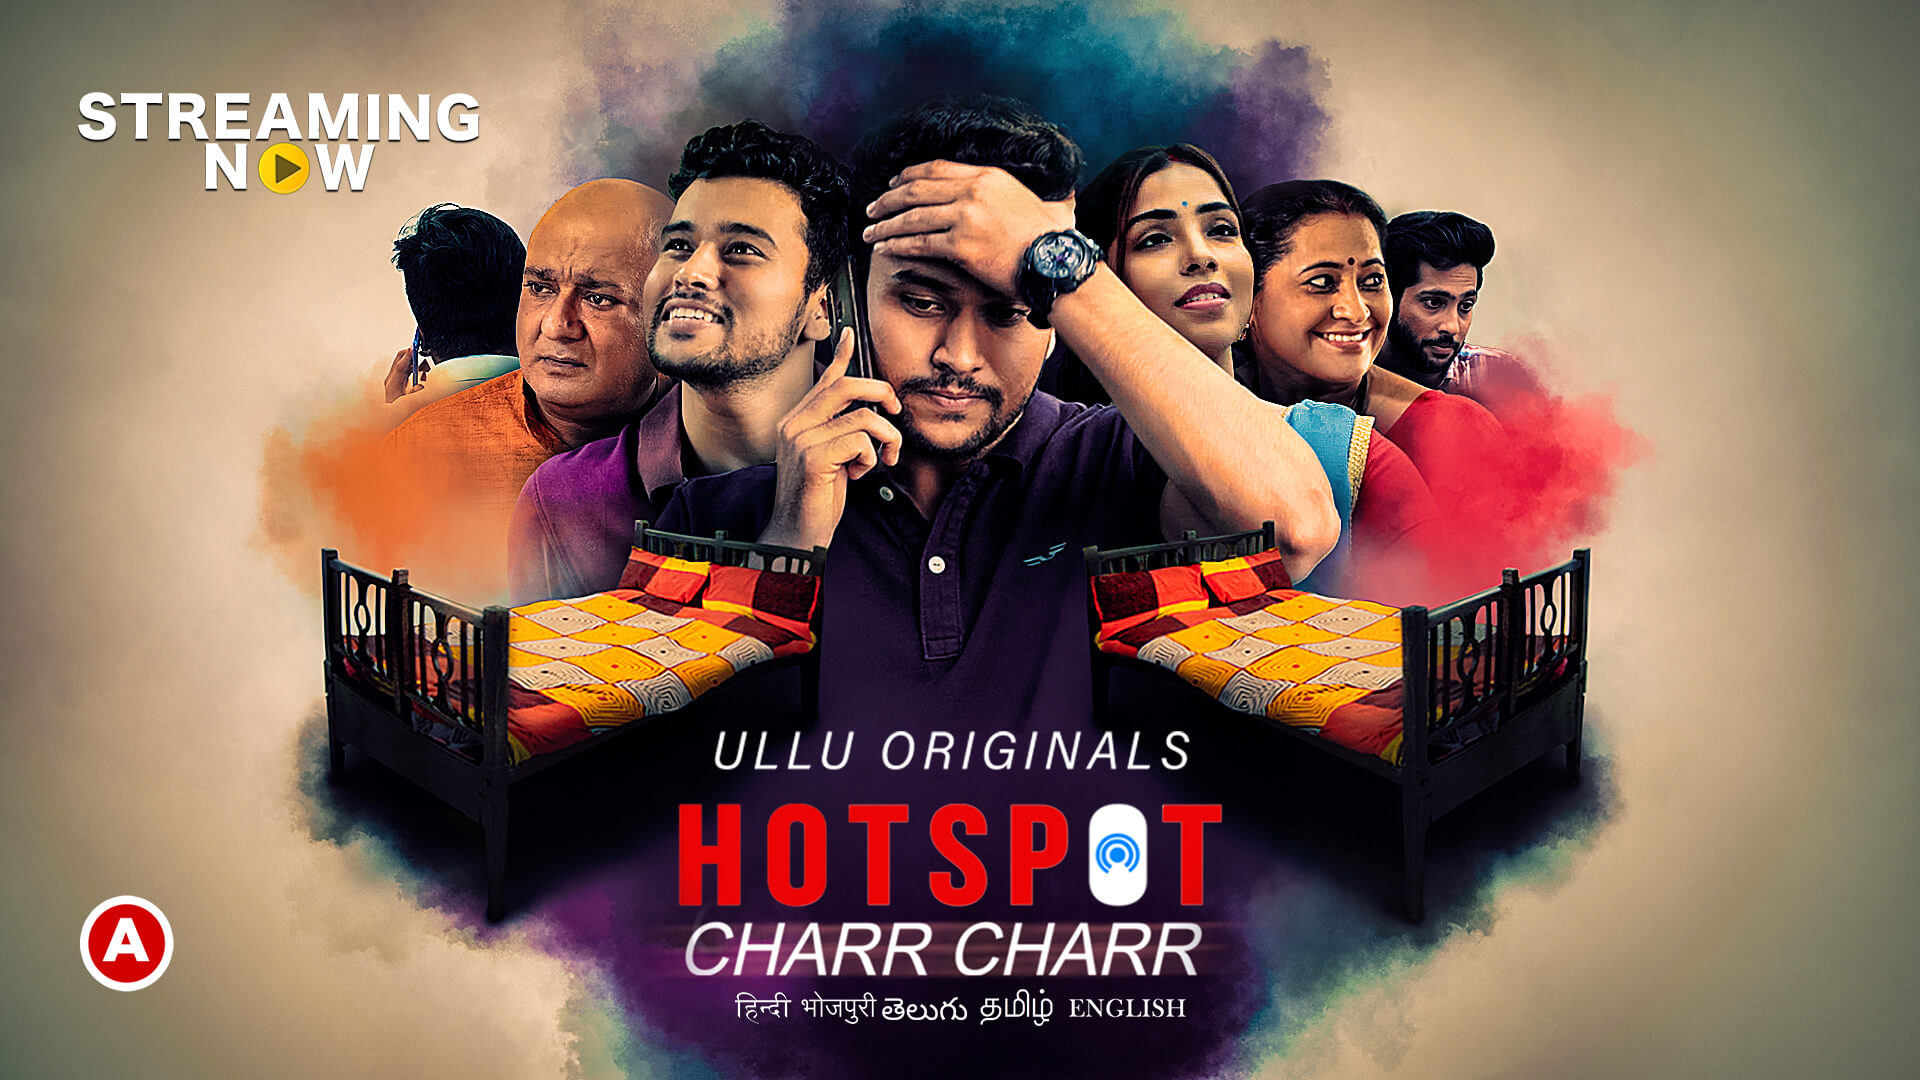 18+ Charr Charr (Hotspot) 2021 S01 Hindi Ullu Originals Complete Web Series 720p HDRip 250MB x264 AAC